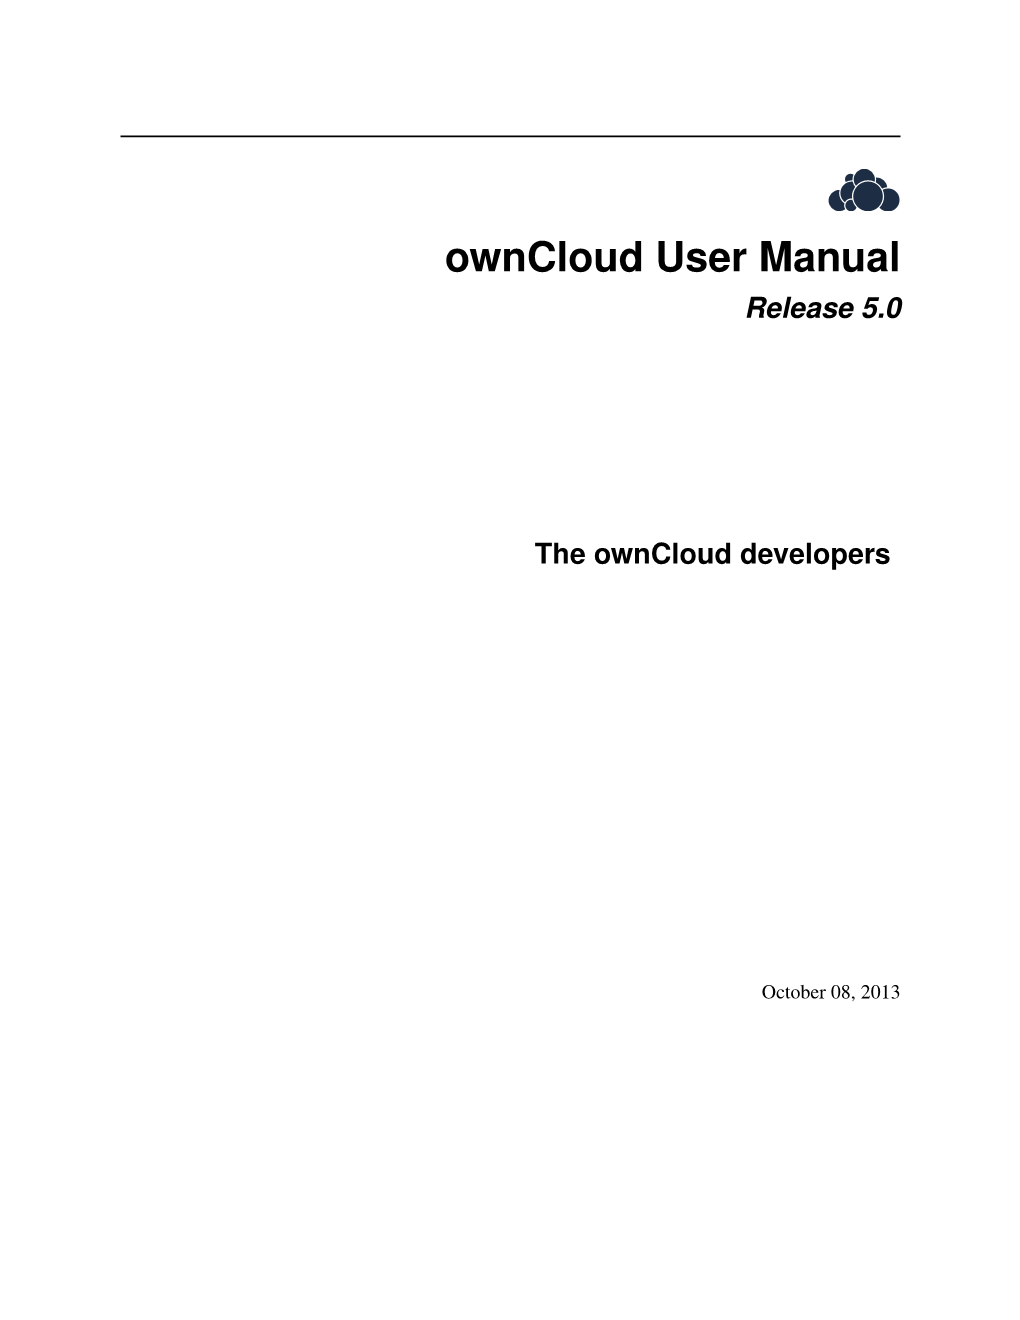 Owncloud User Manual Release 5.0